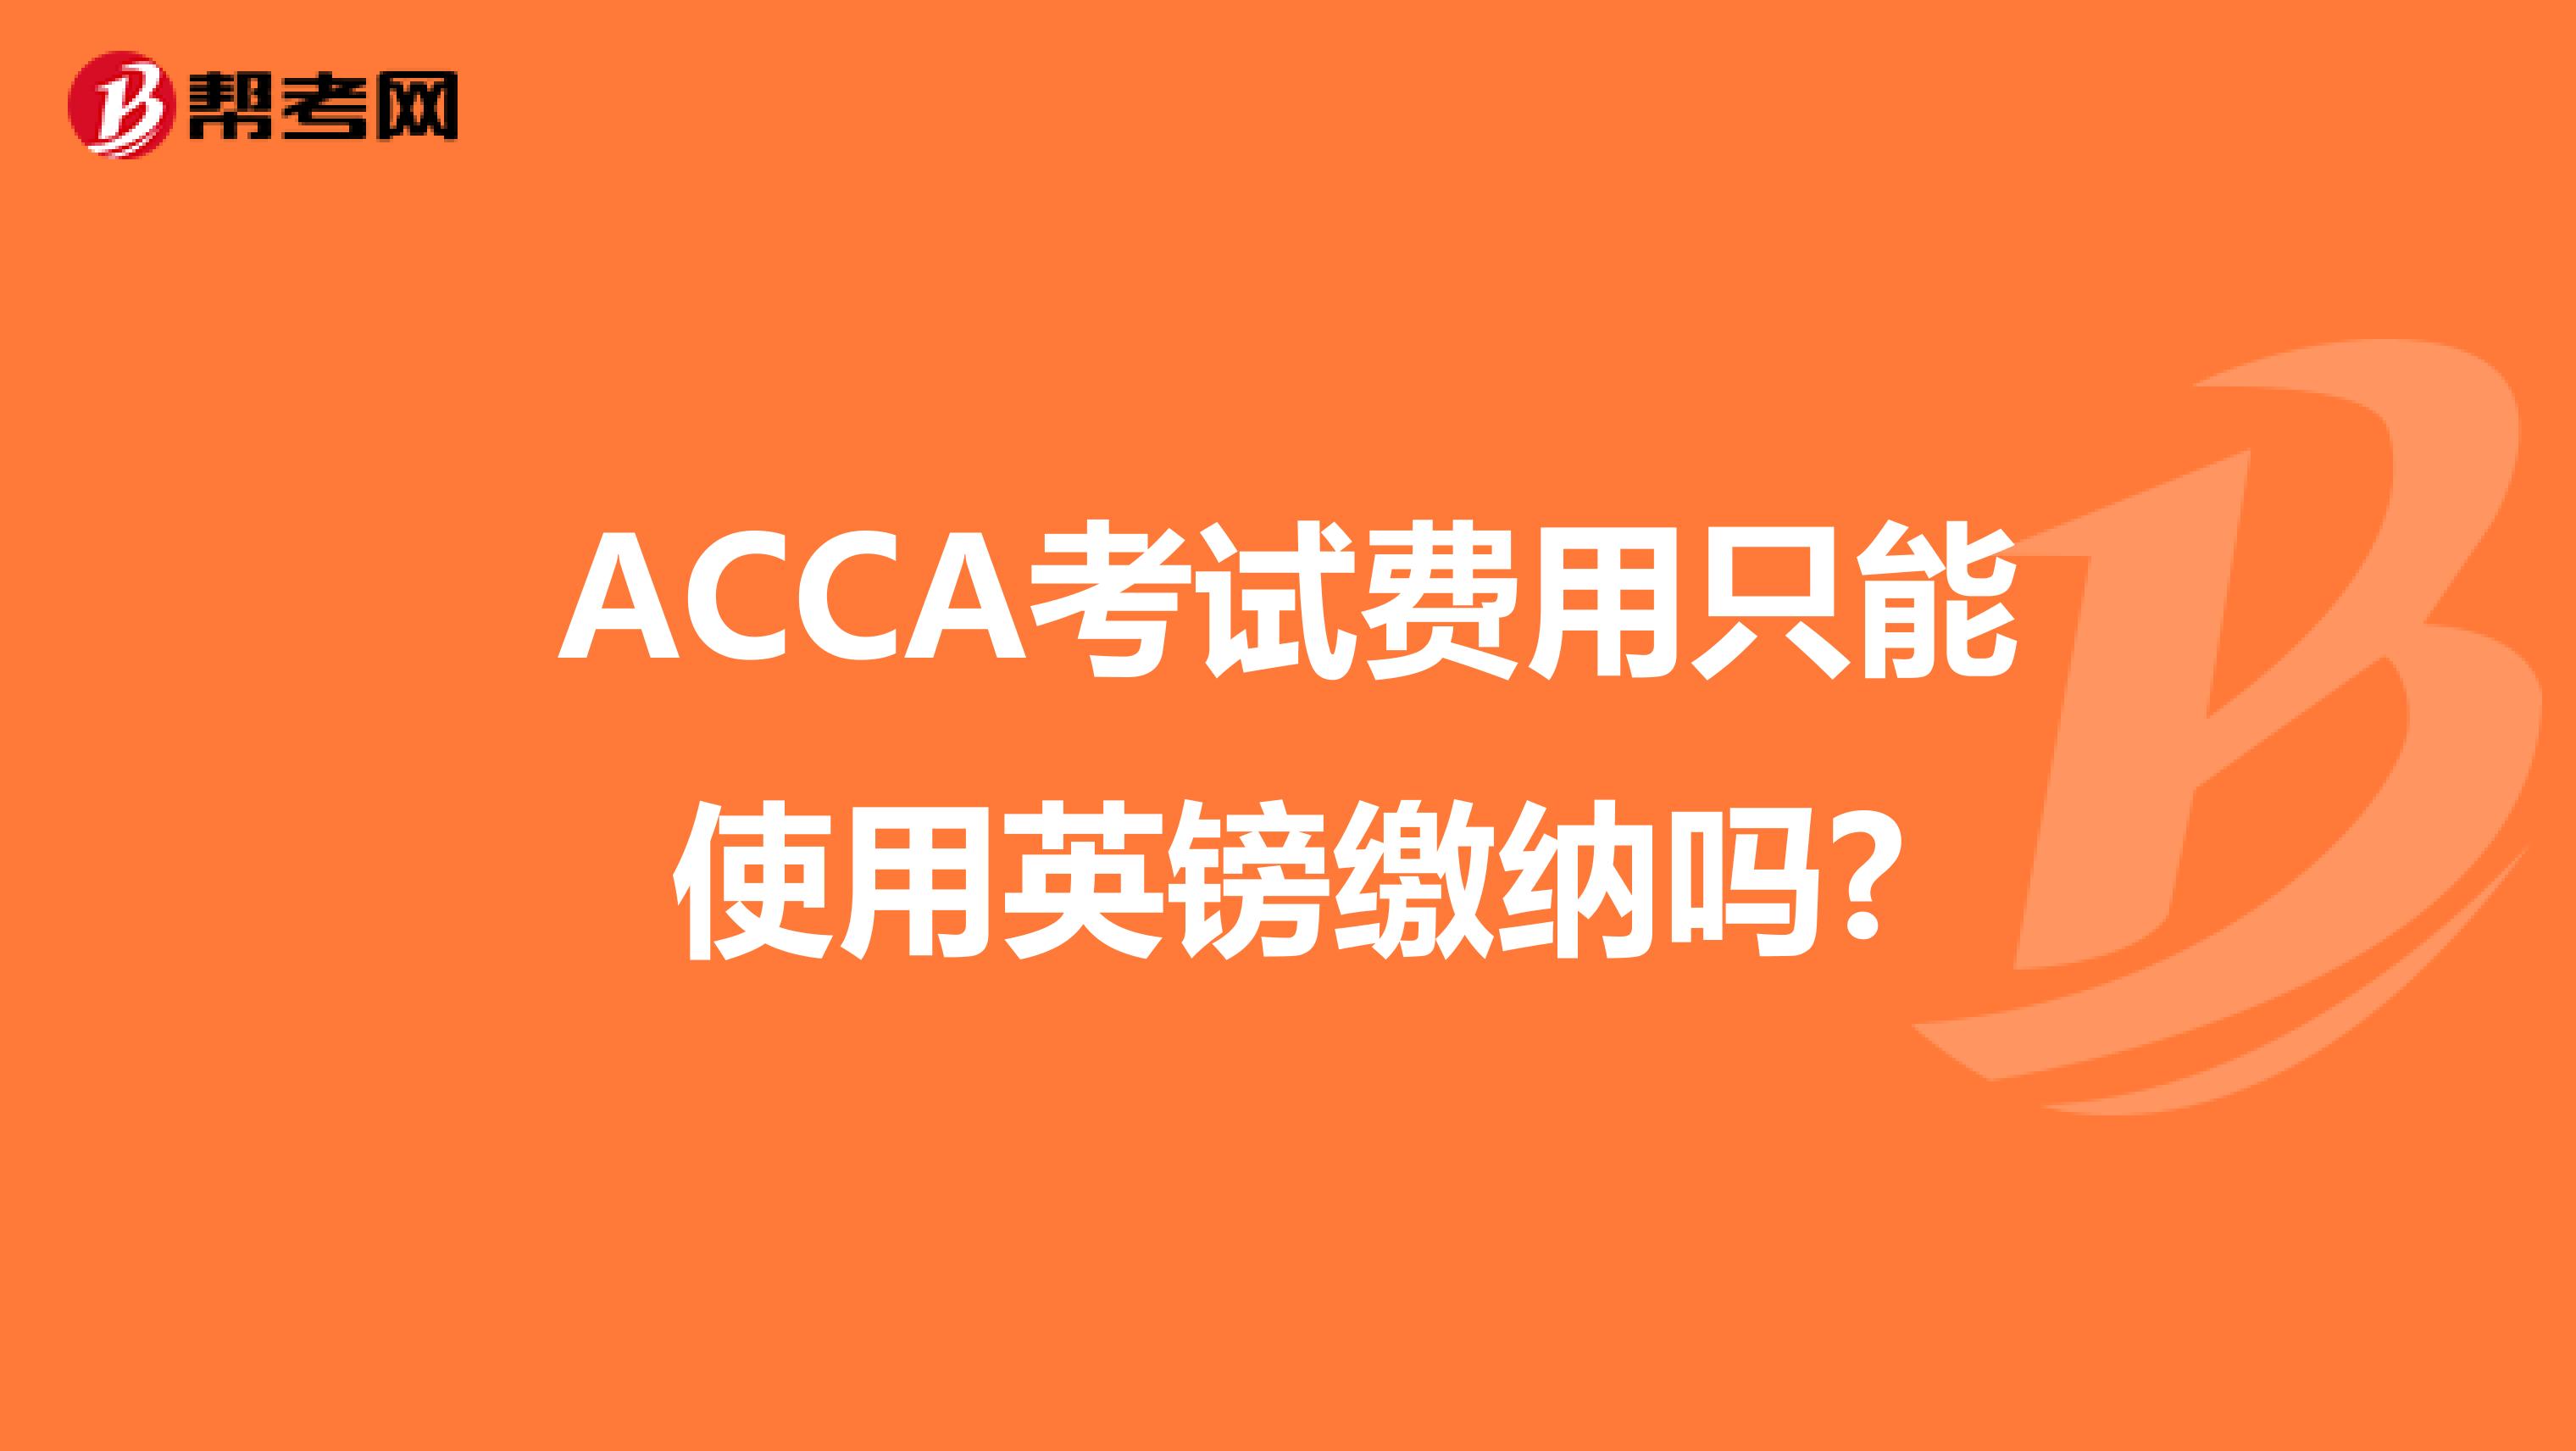 ACCA考试费用只能使用英镑缴纳吗?